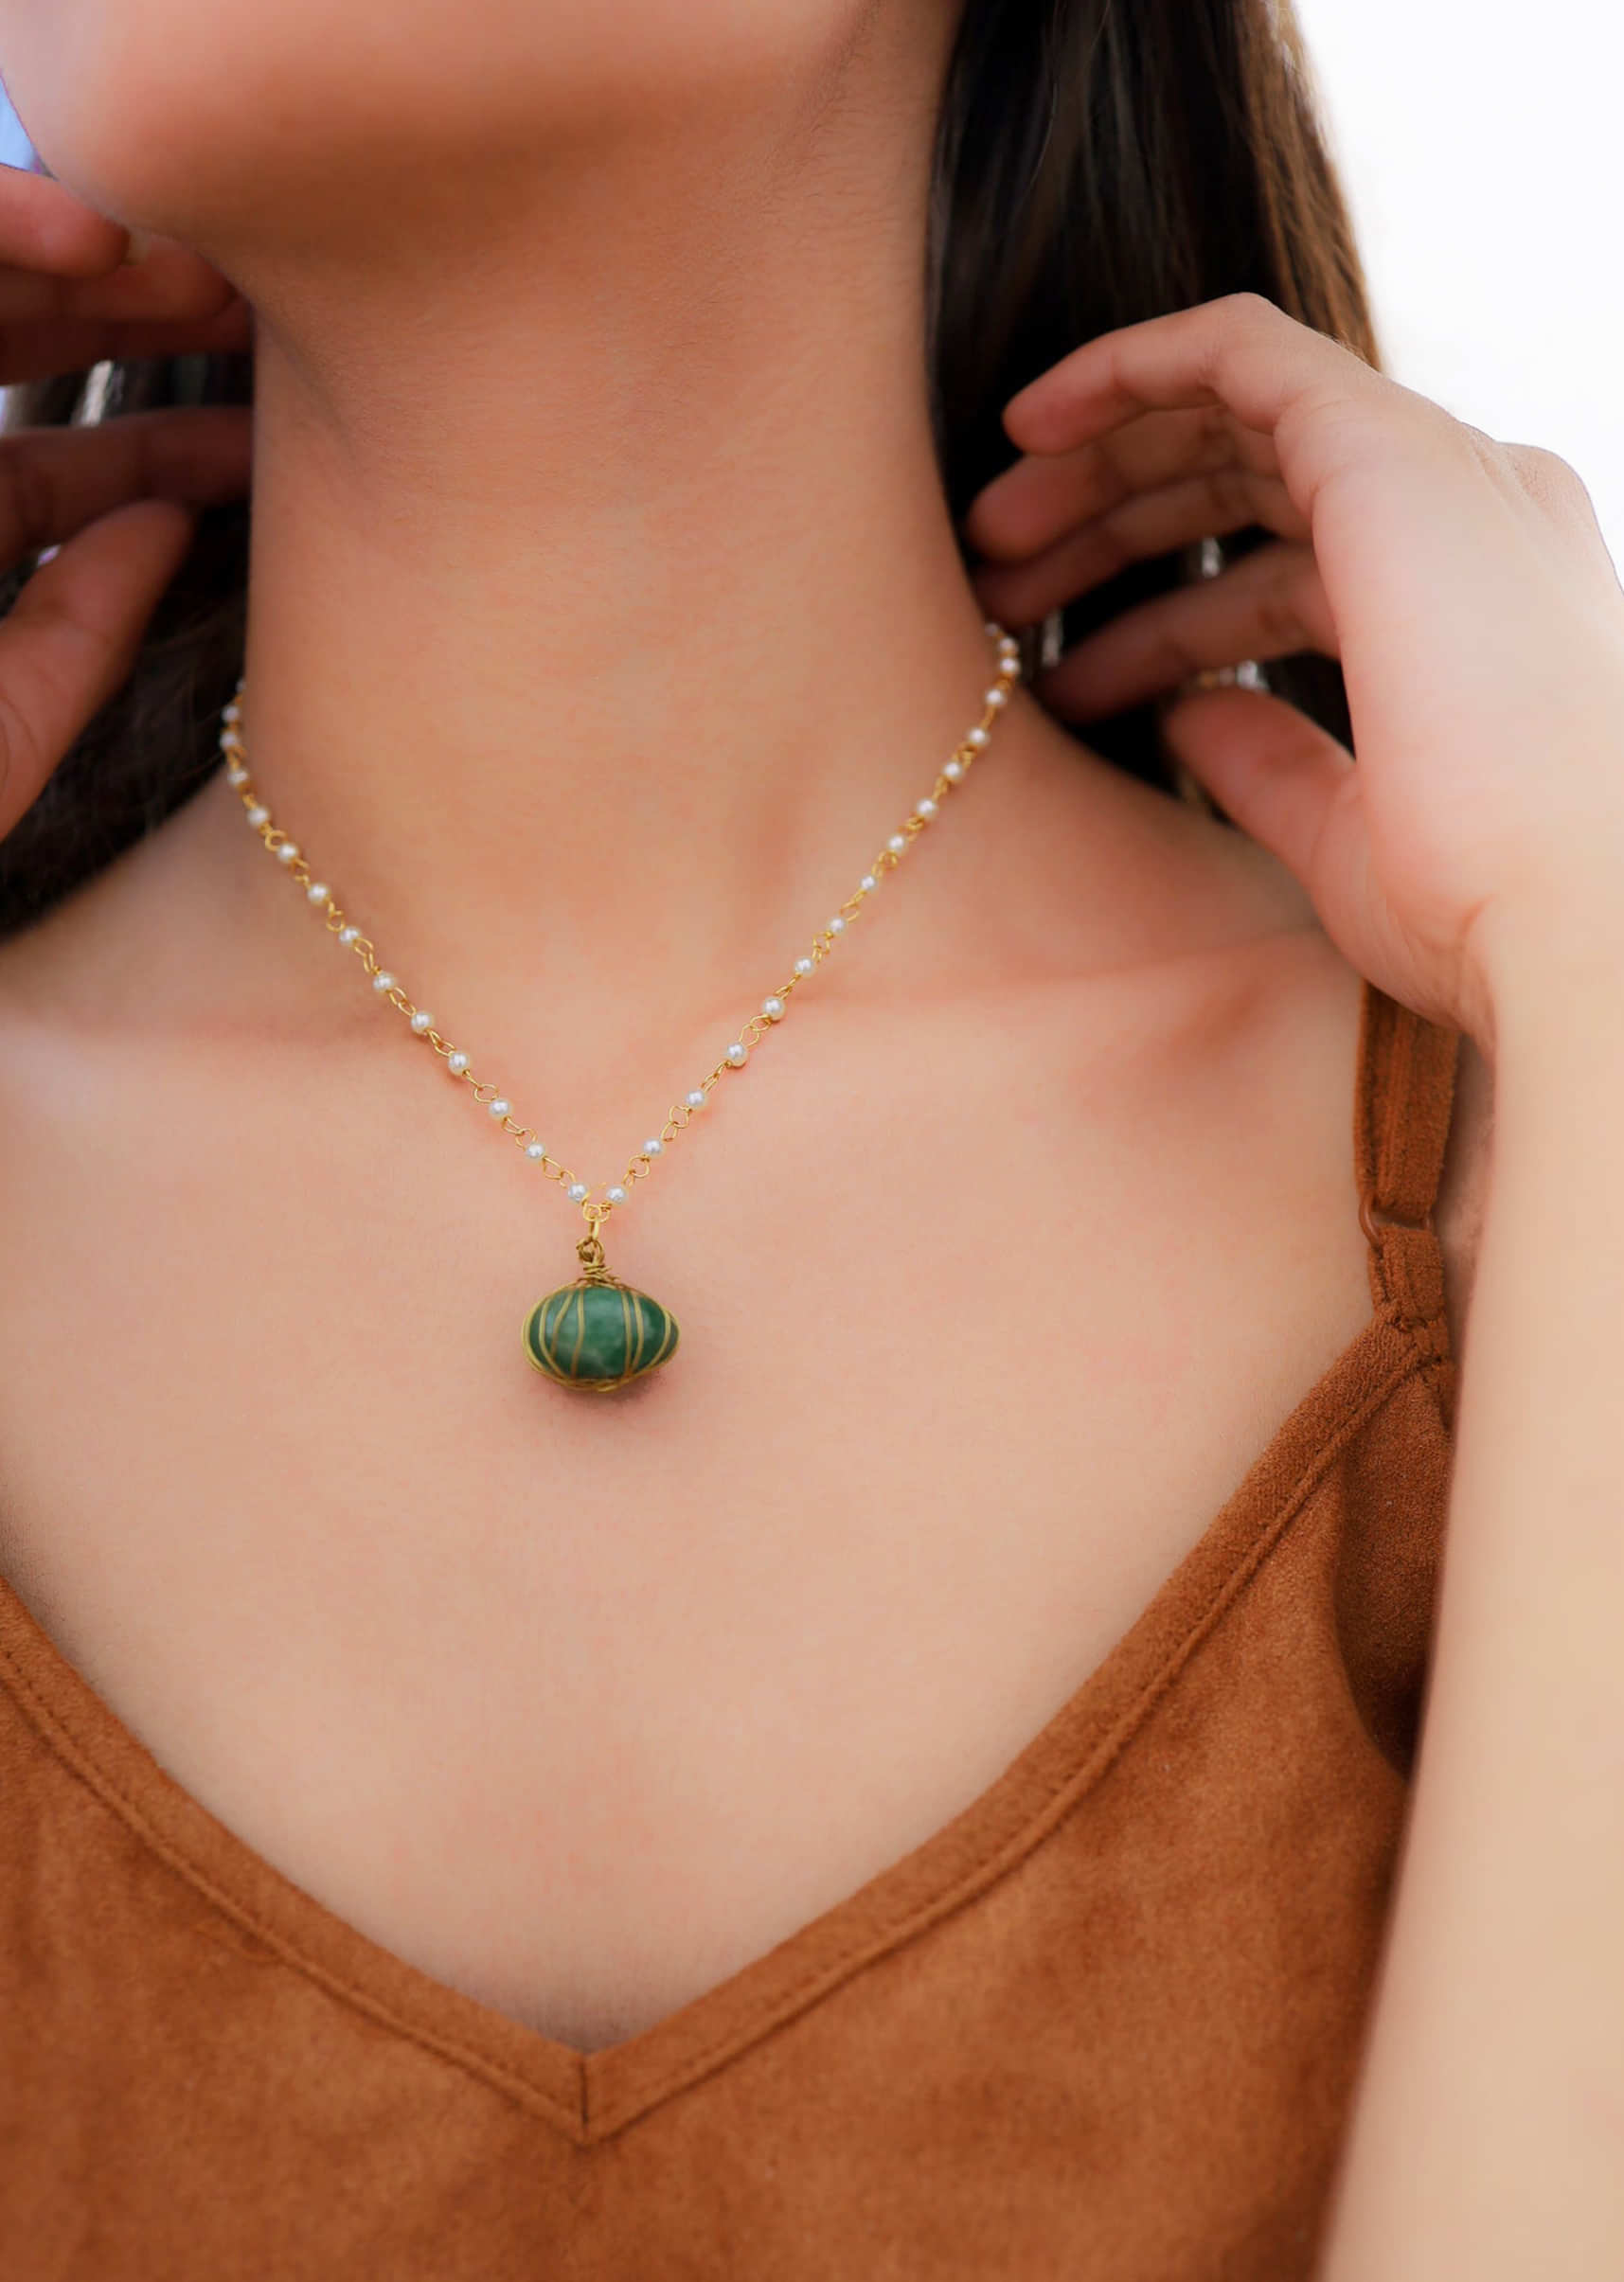 Jade Green Pearl Pendant Necklace.